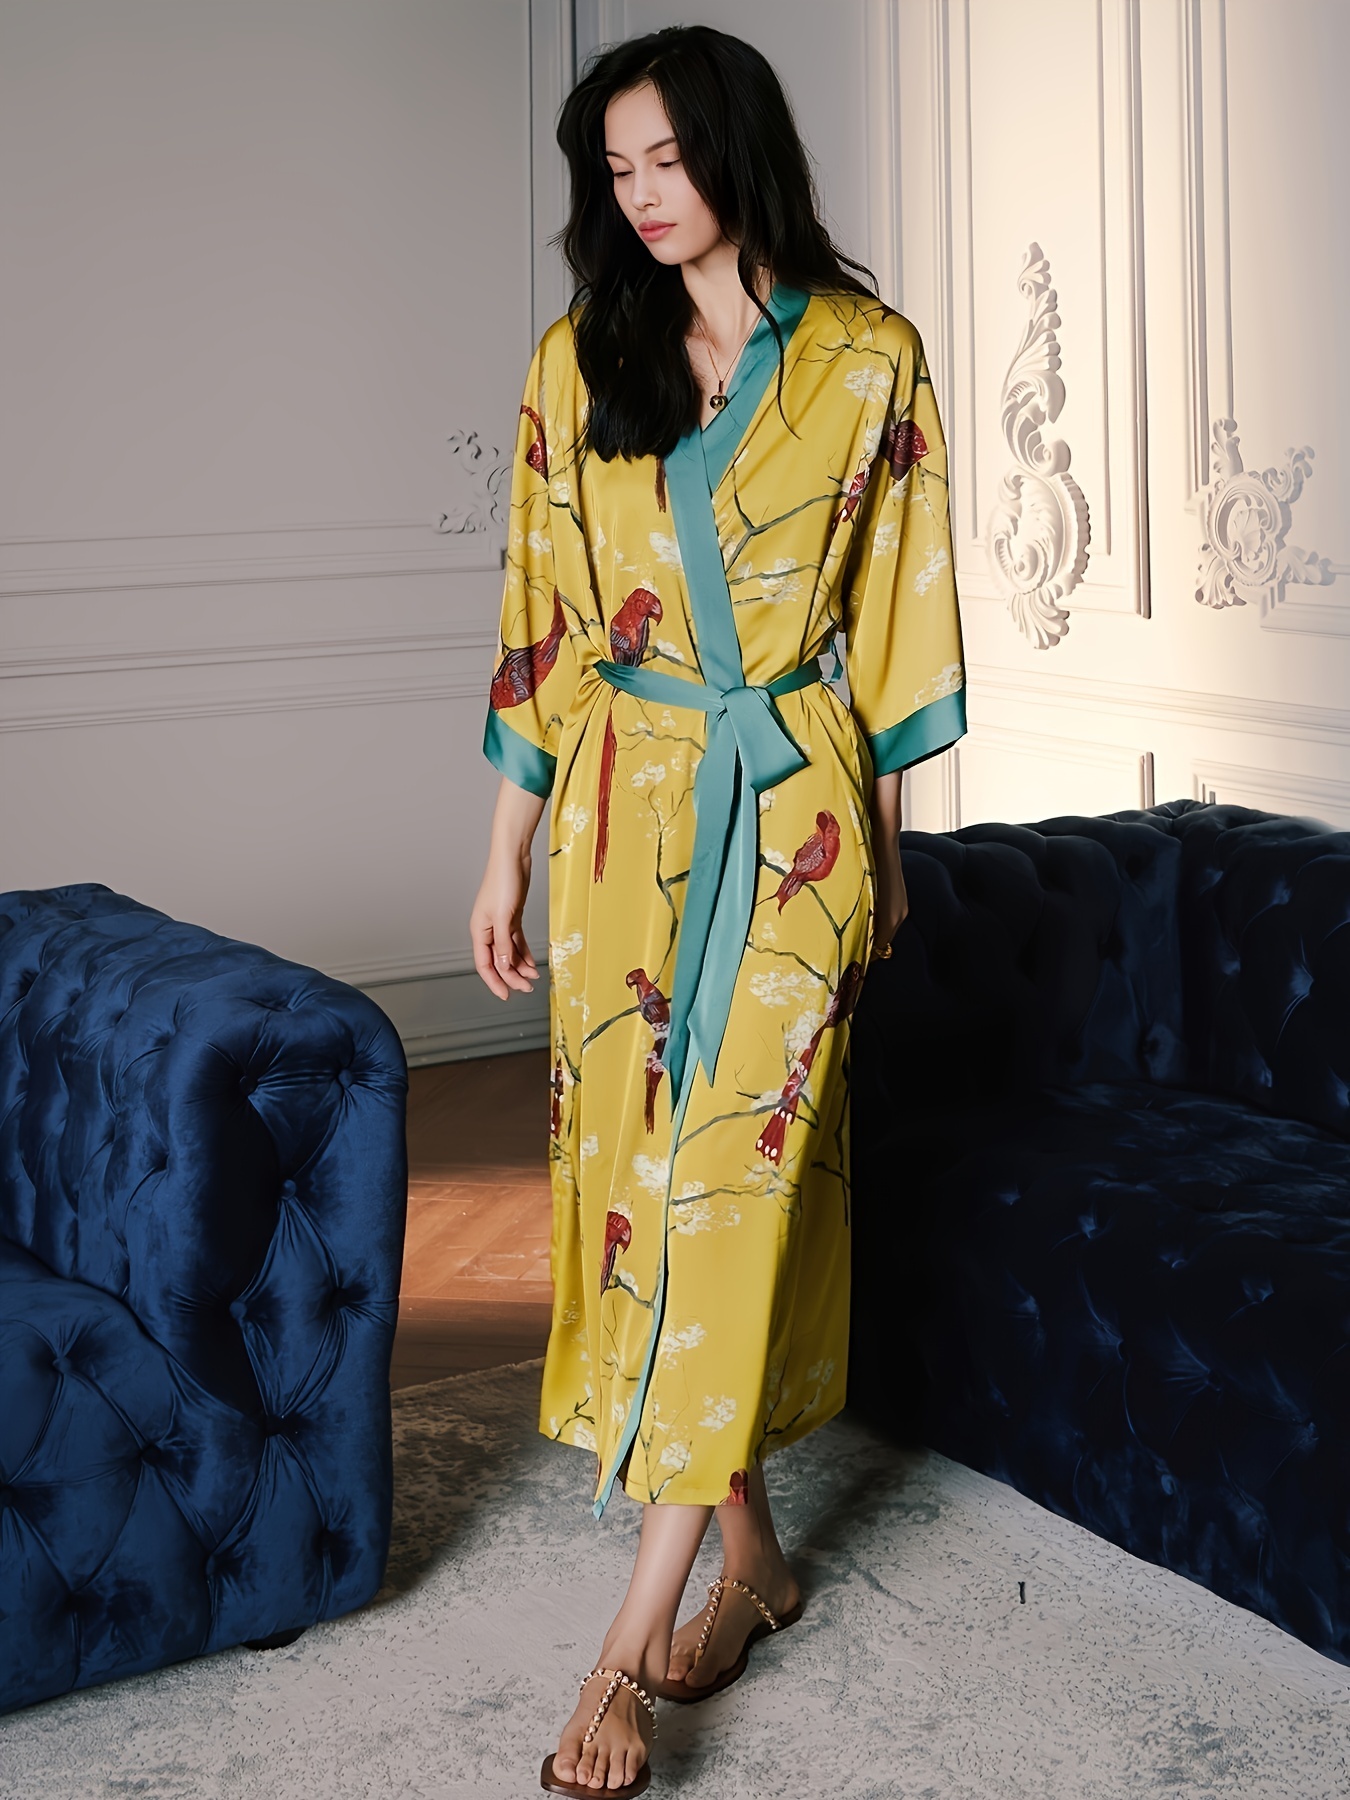 Beautiful Robes : Kimonos robes & Homewares